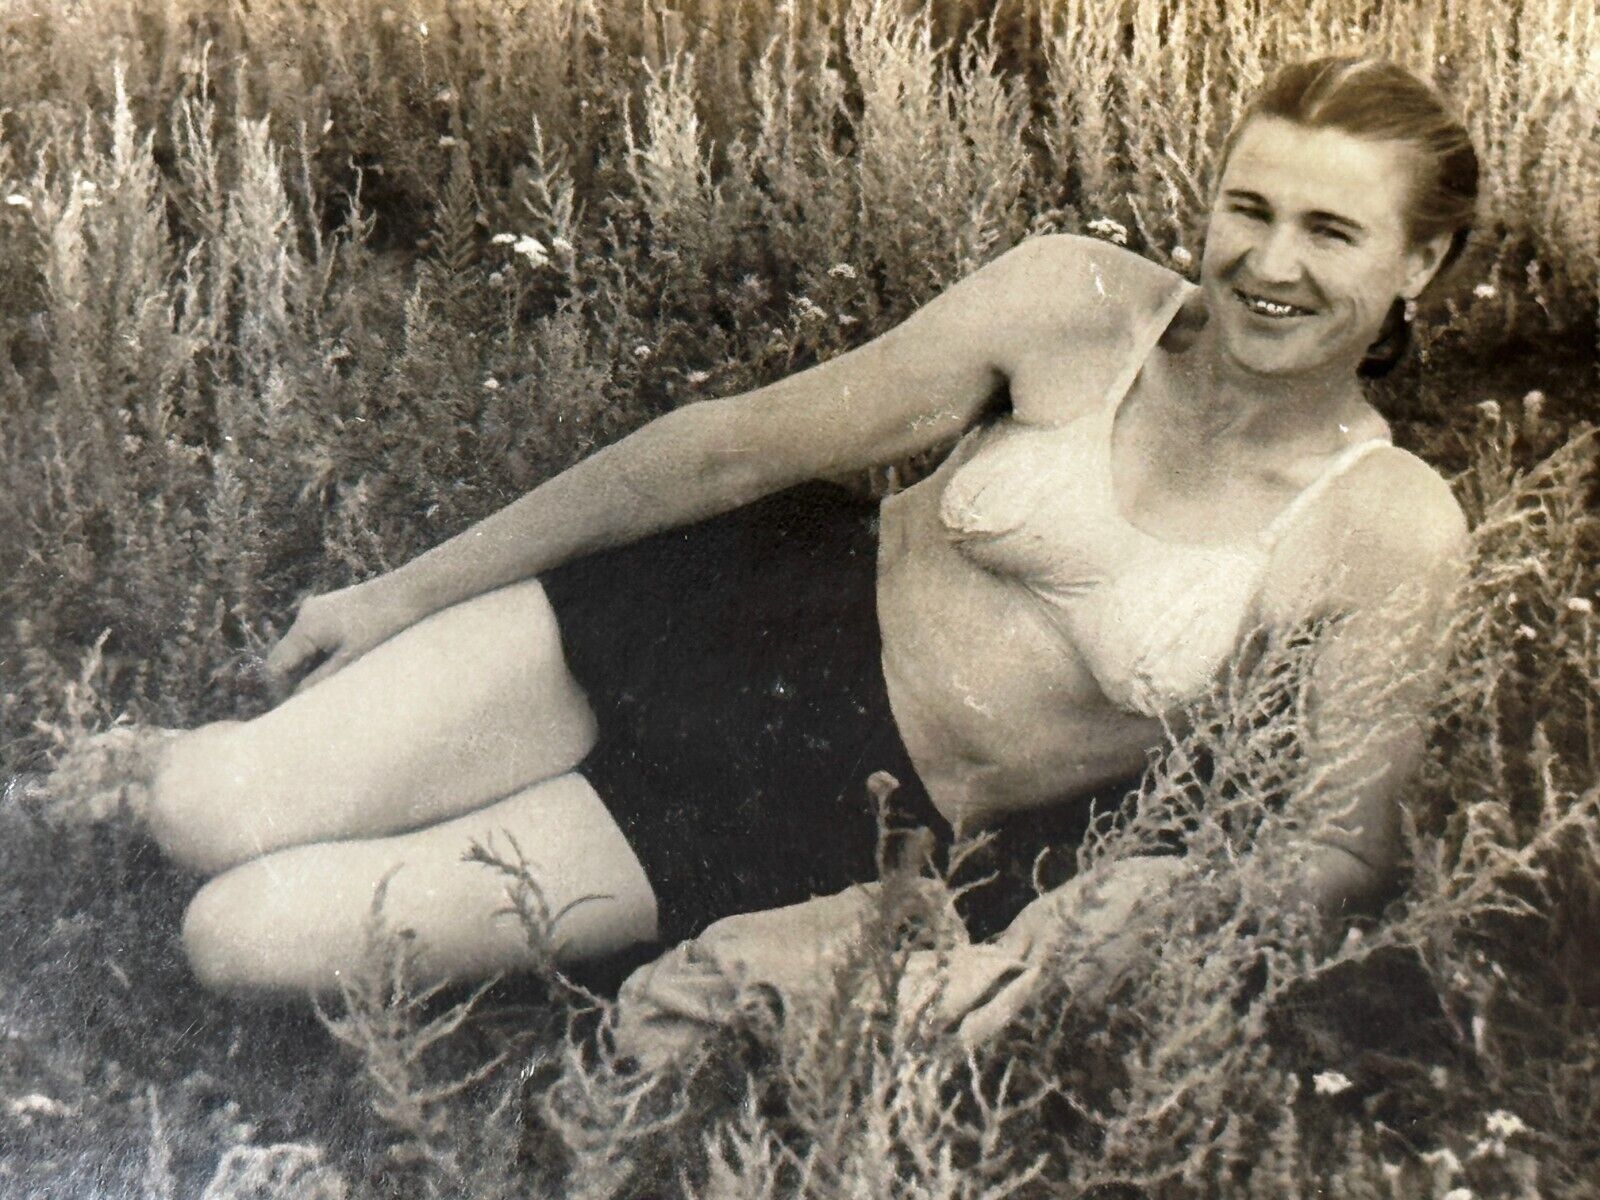 1940s Beach Smiling Metal Teeth Young Woman Bikini Lying on grass Vintage Photo